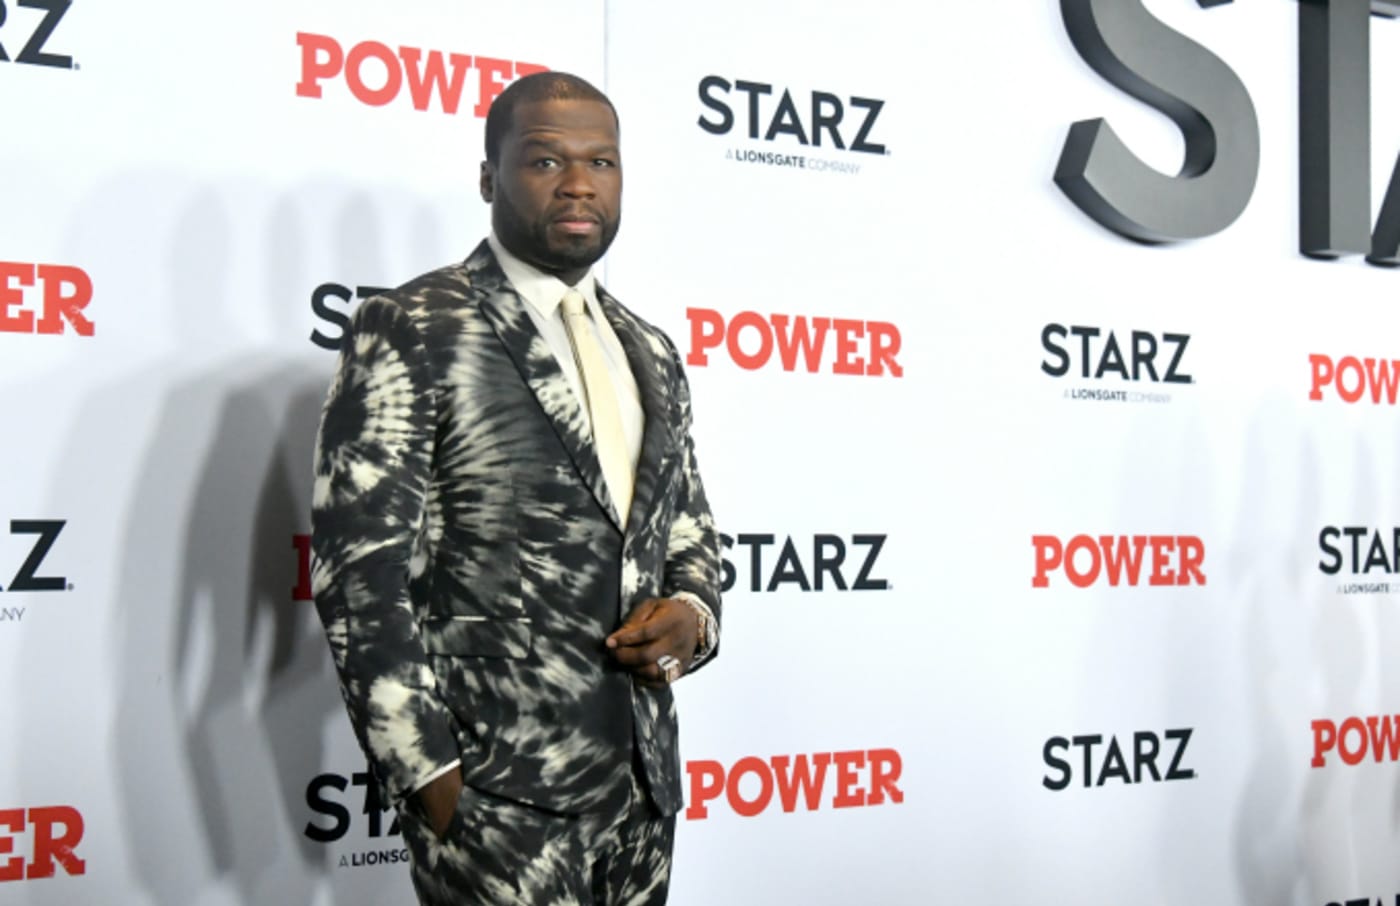 Curtis "50 Cent" Jackson attends the "Power" Final Season World Premiere